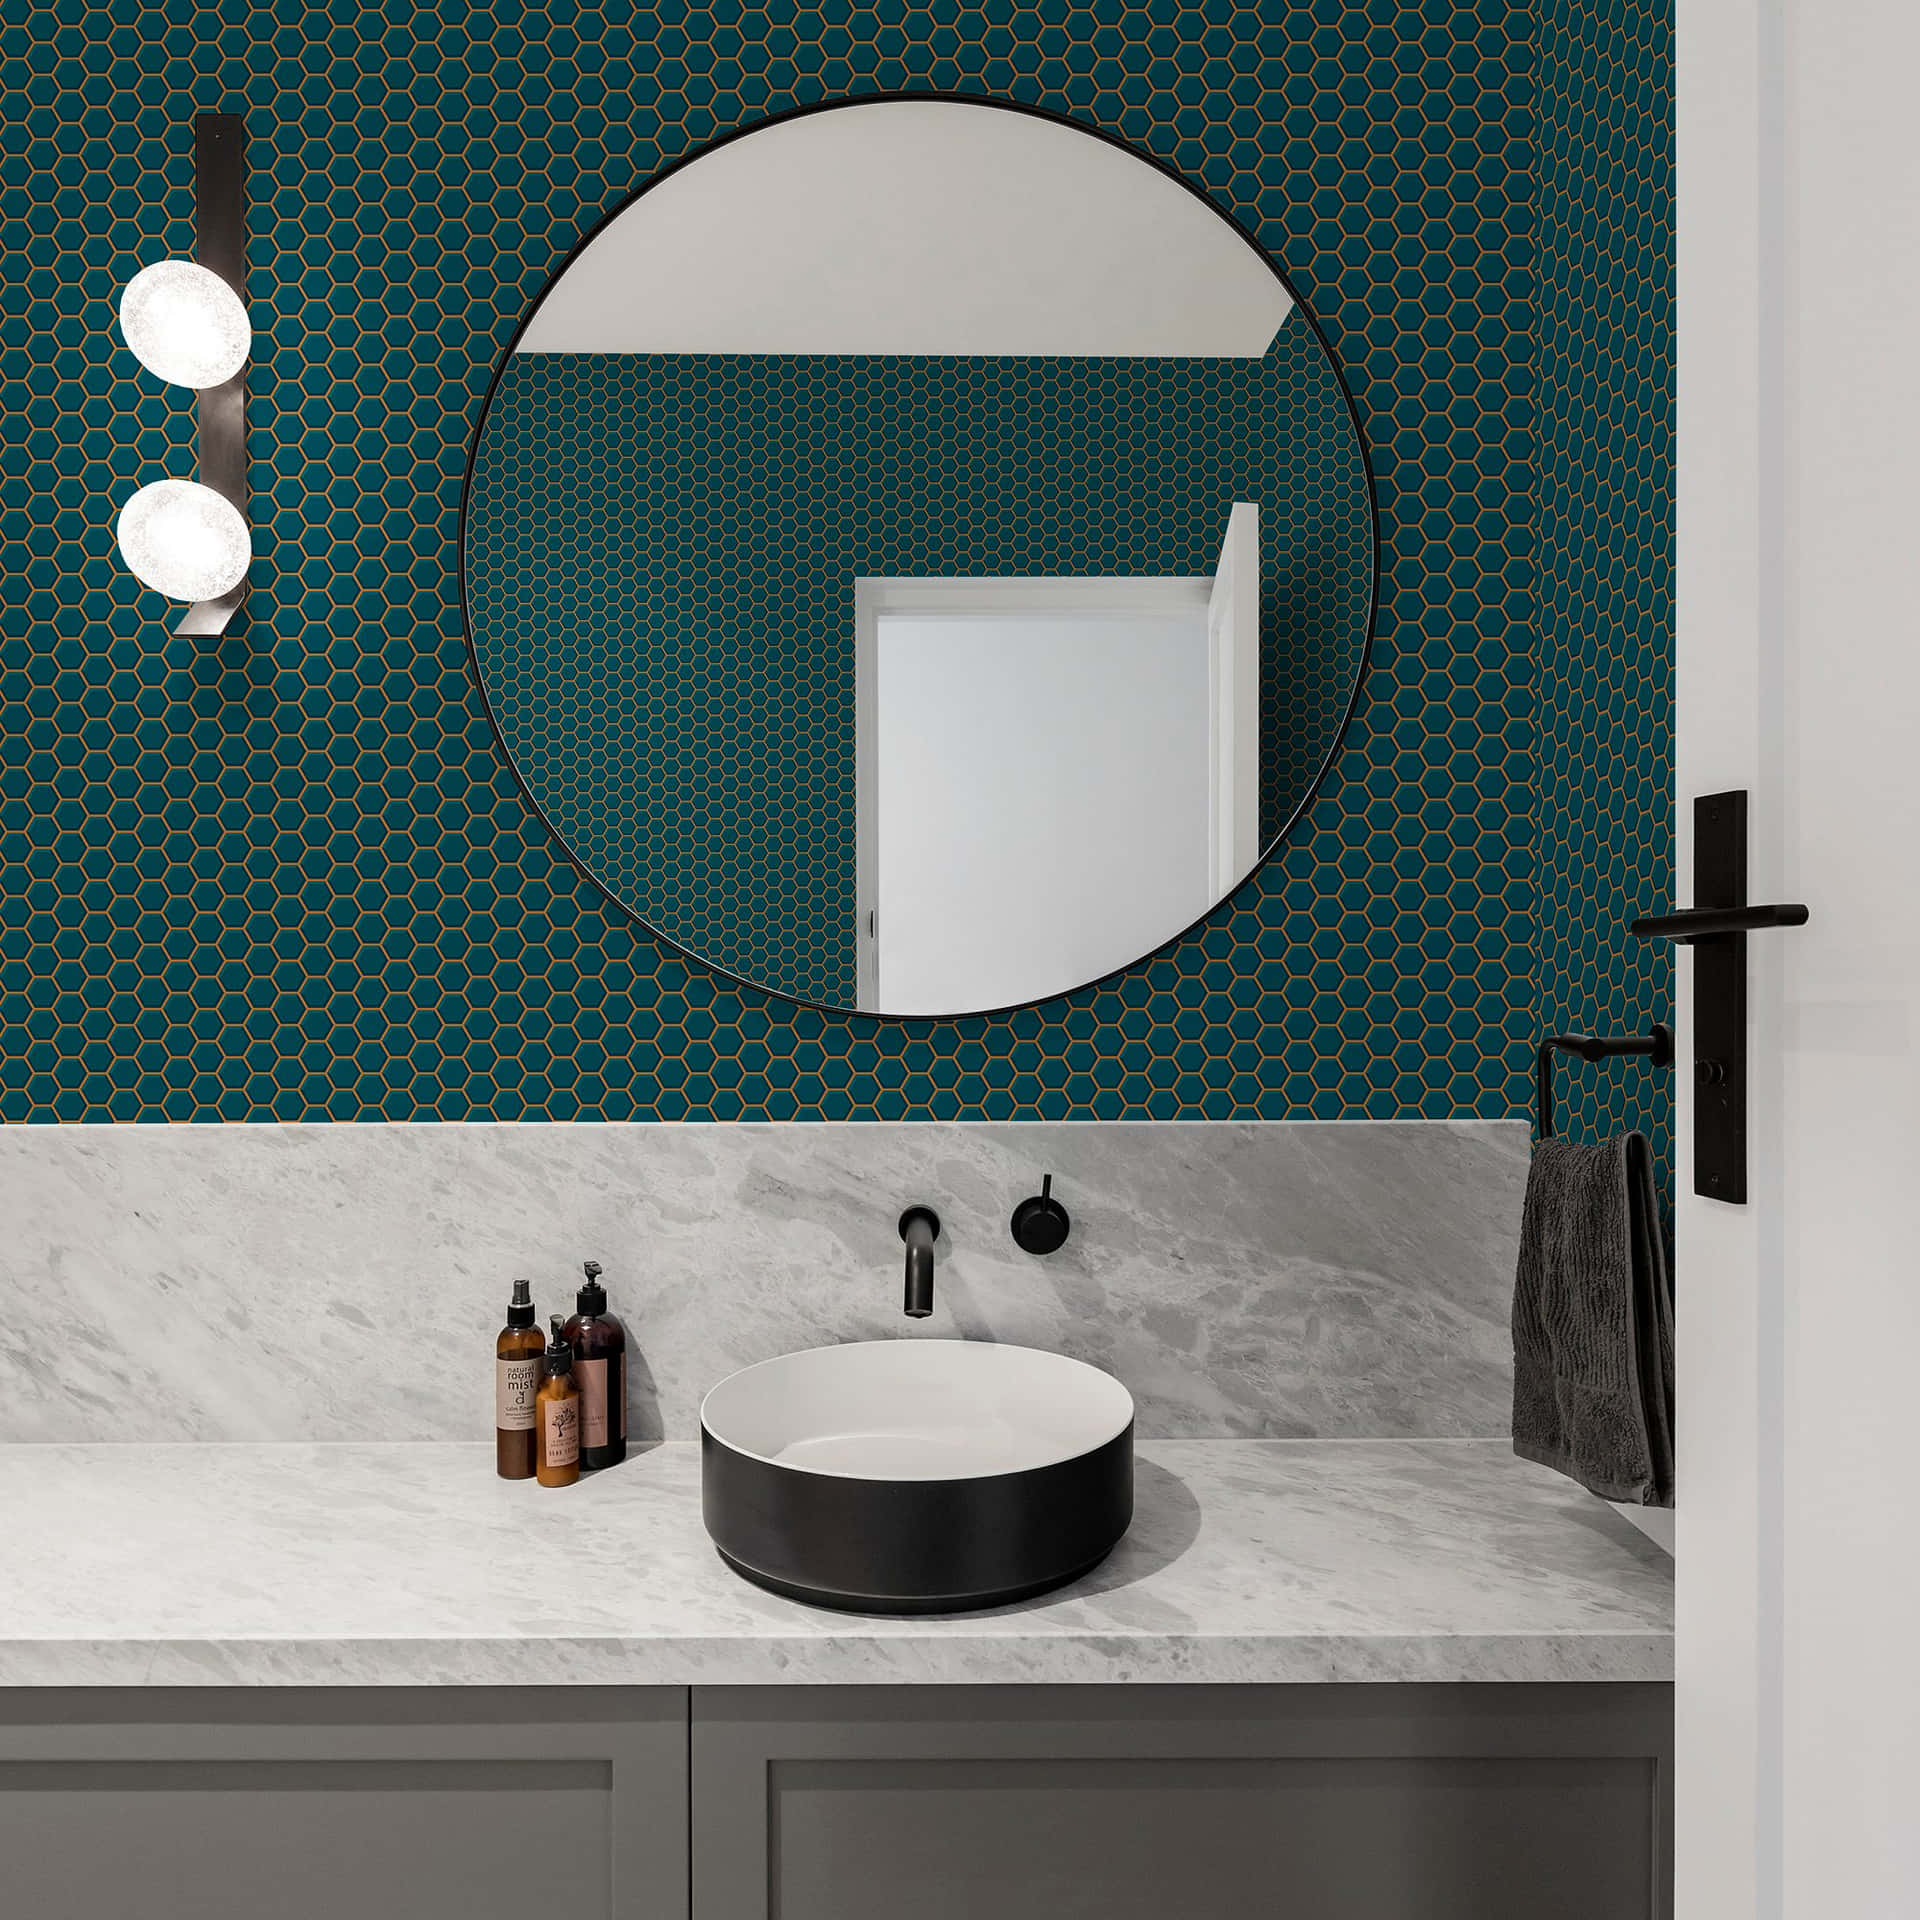 Tiles Teal Bathroom Sink Mirror Picture